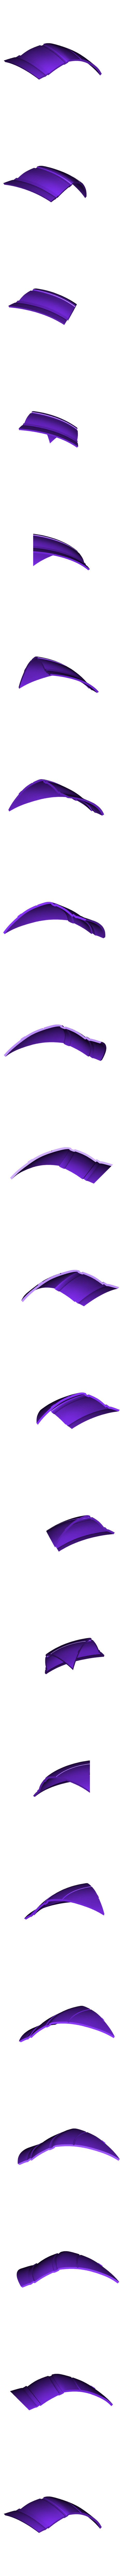 Part_4_v3.stl Download free STL file Thor Ragnarok Helmet (Wing Rotator) • 3D print template, VillainousPropShop